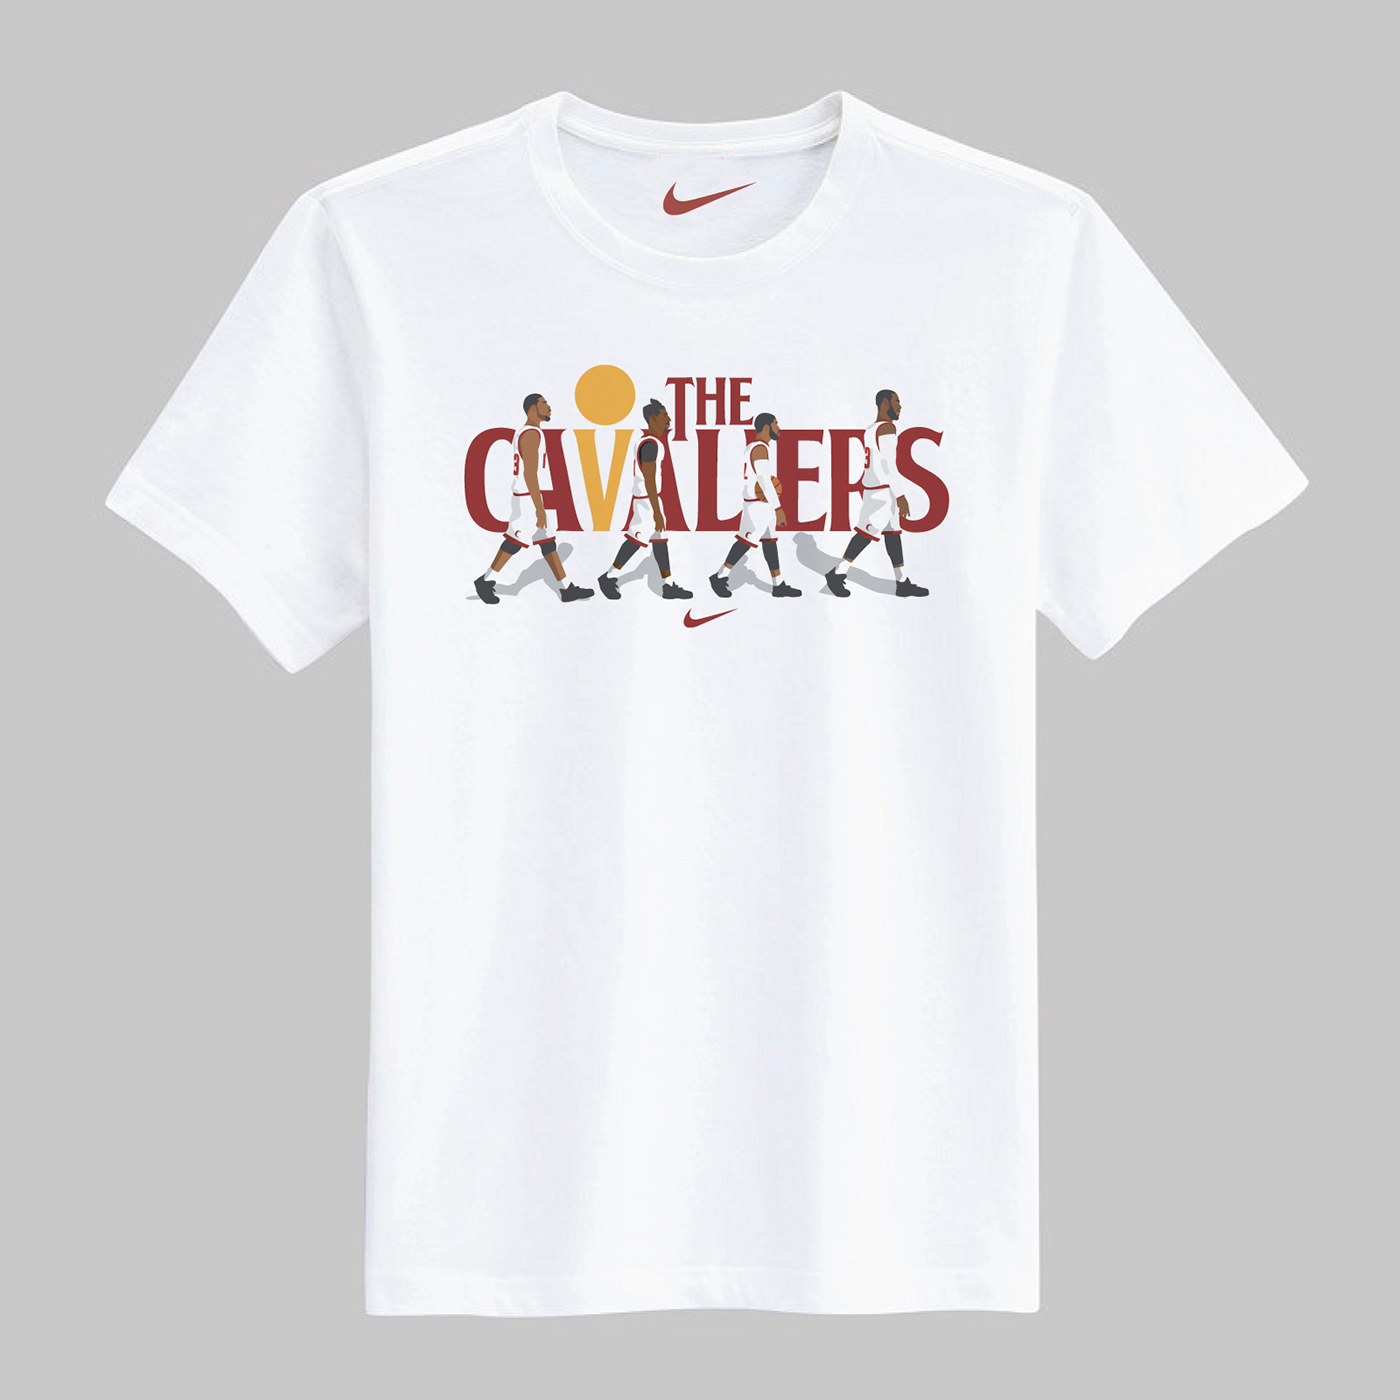 The Cavaliers x The Beatles